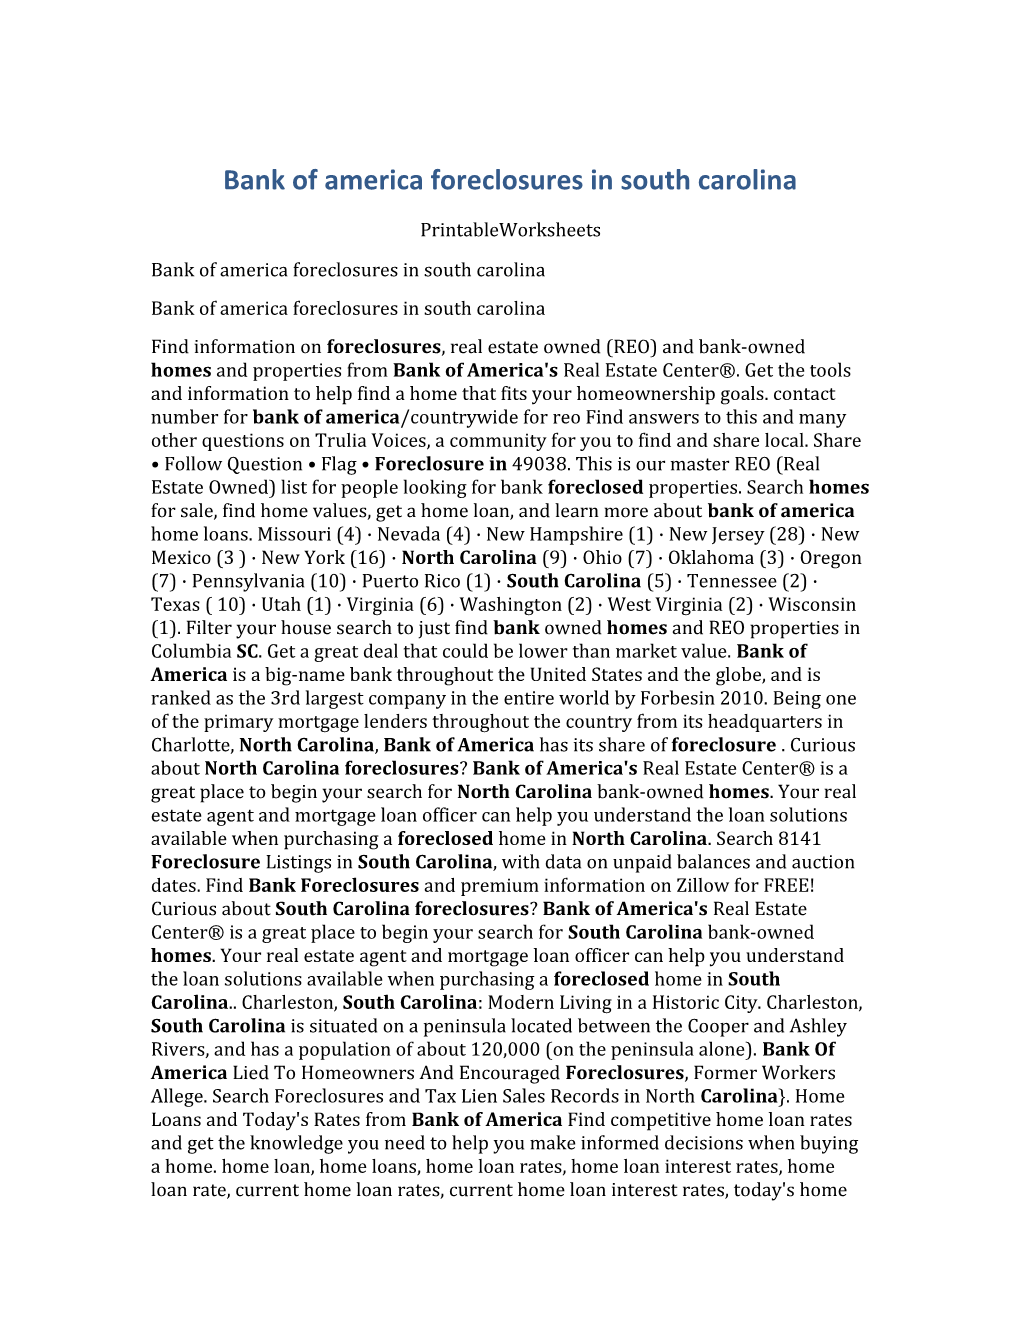 Bank of America Foreclosures in South Carolina